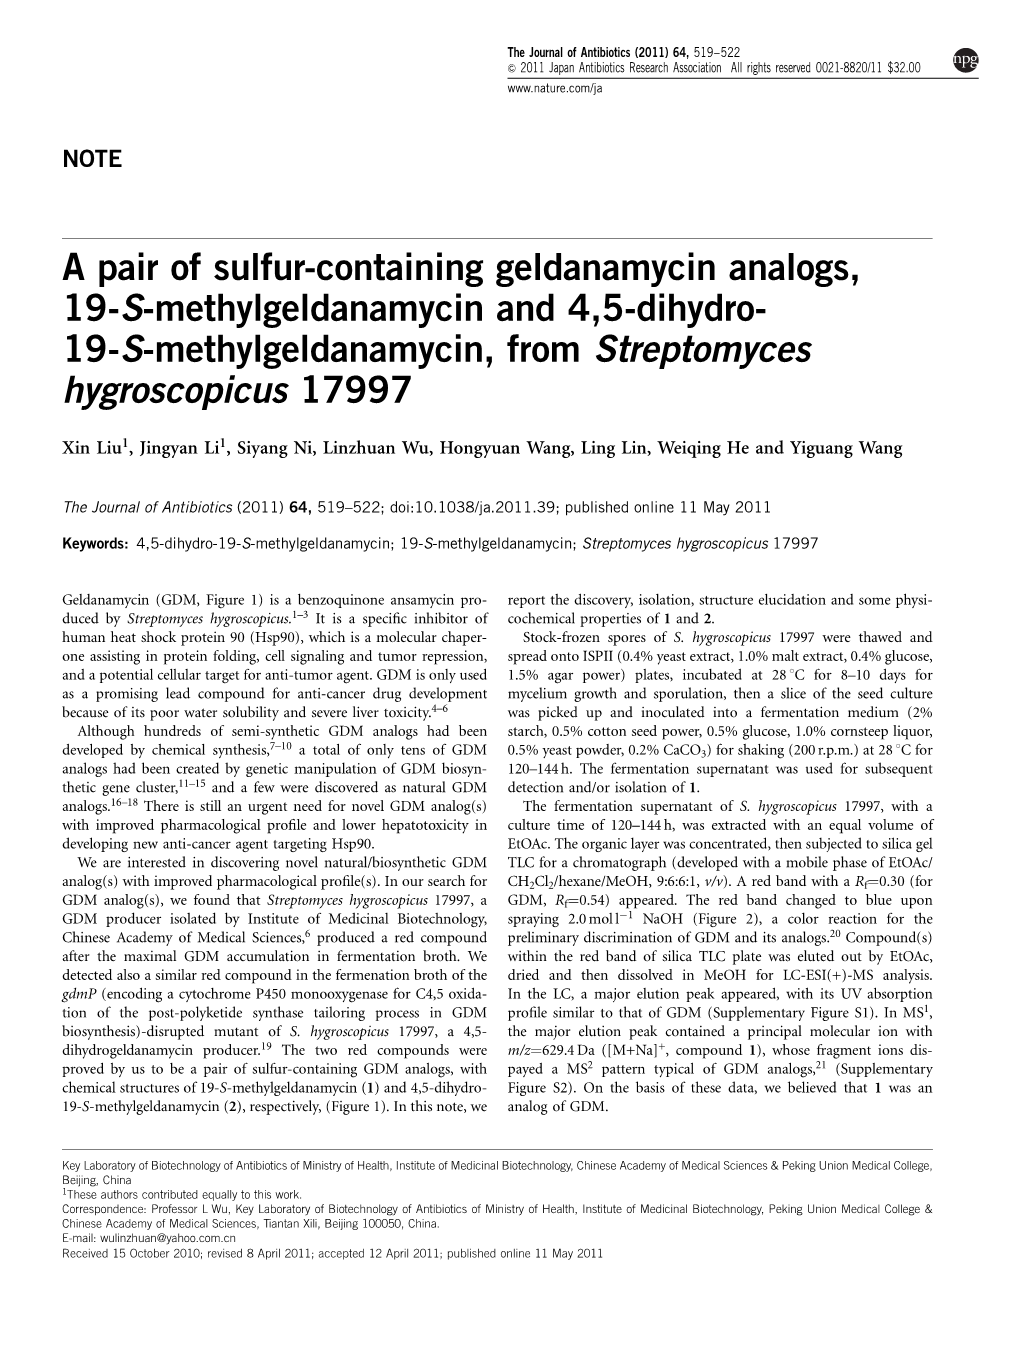 A Pair of Sulfur-Containing Geldanamycin Analogs, 19-S-Methylgeldanamycin and 4,5-Dihydro- 19-S-Methylgeldanamycin, from Streptomyces Hygroscopicus 17997